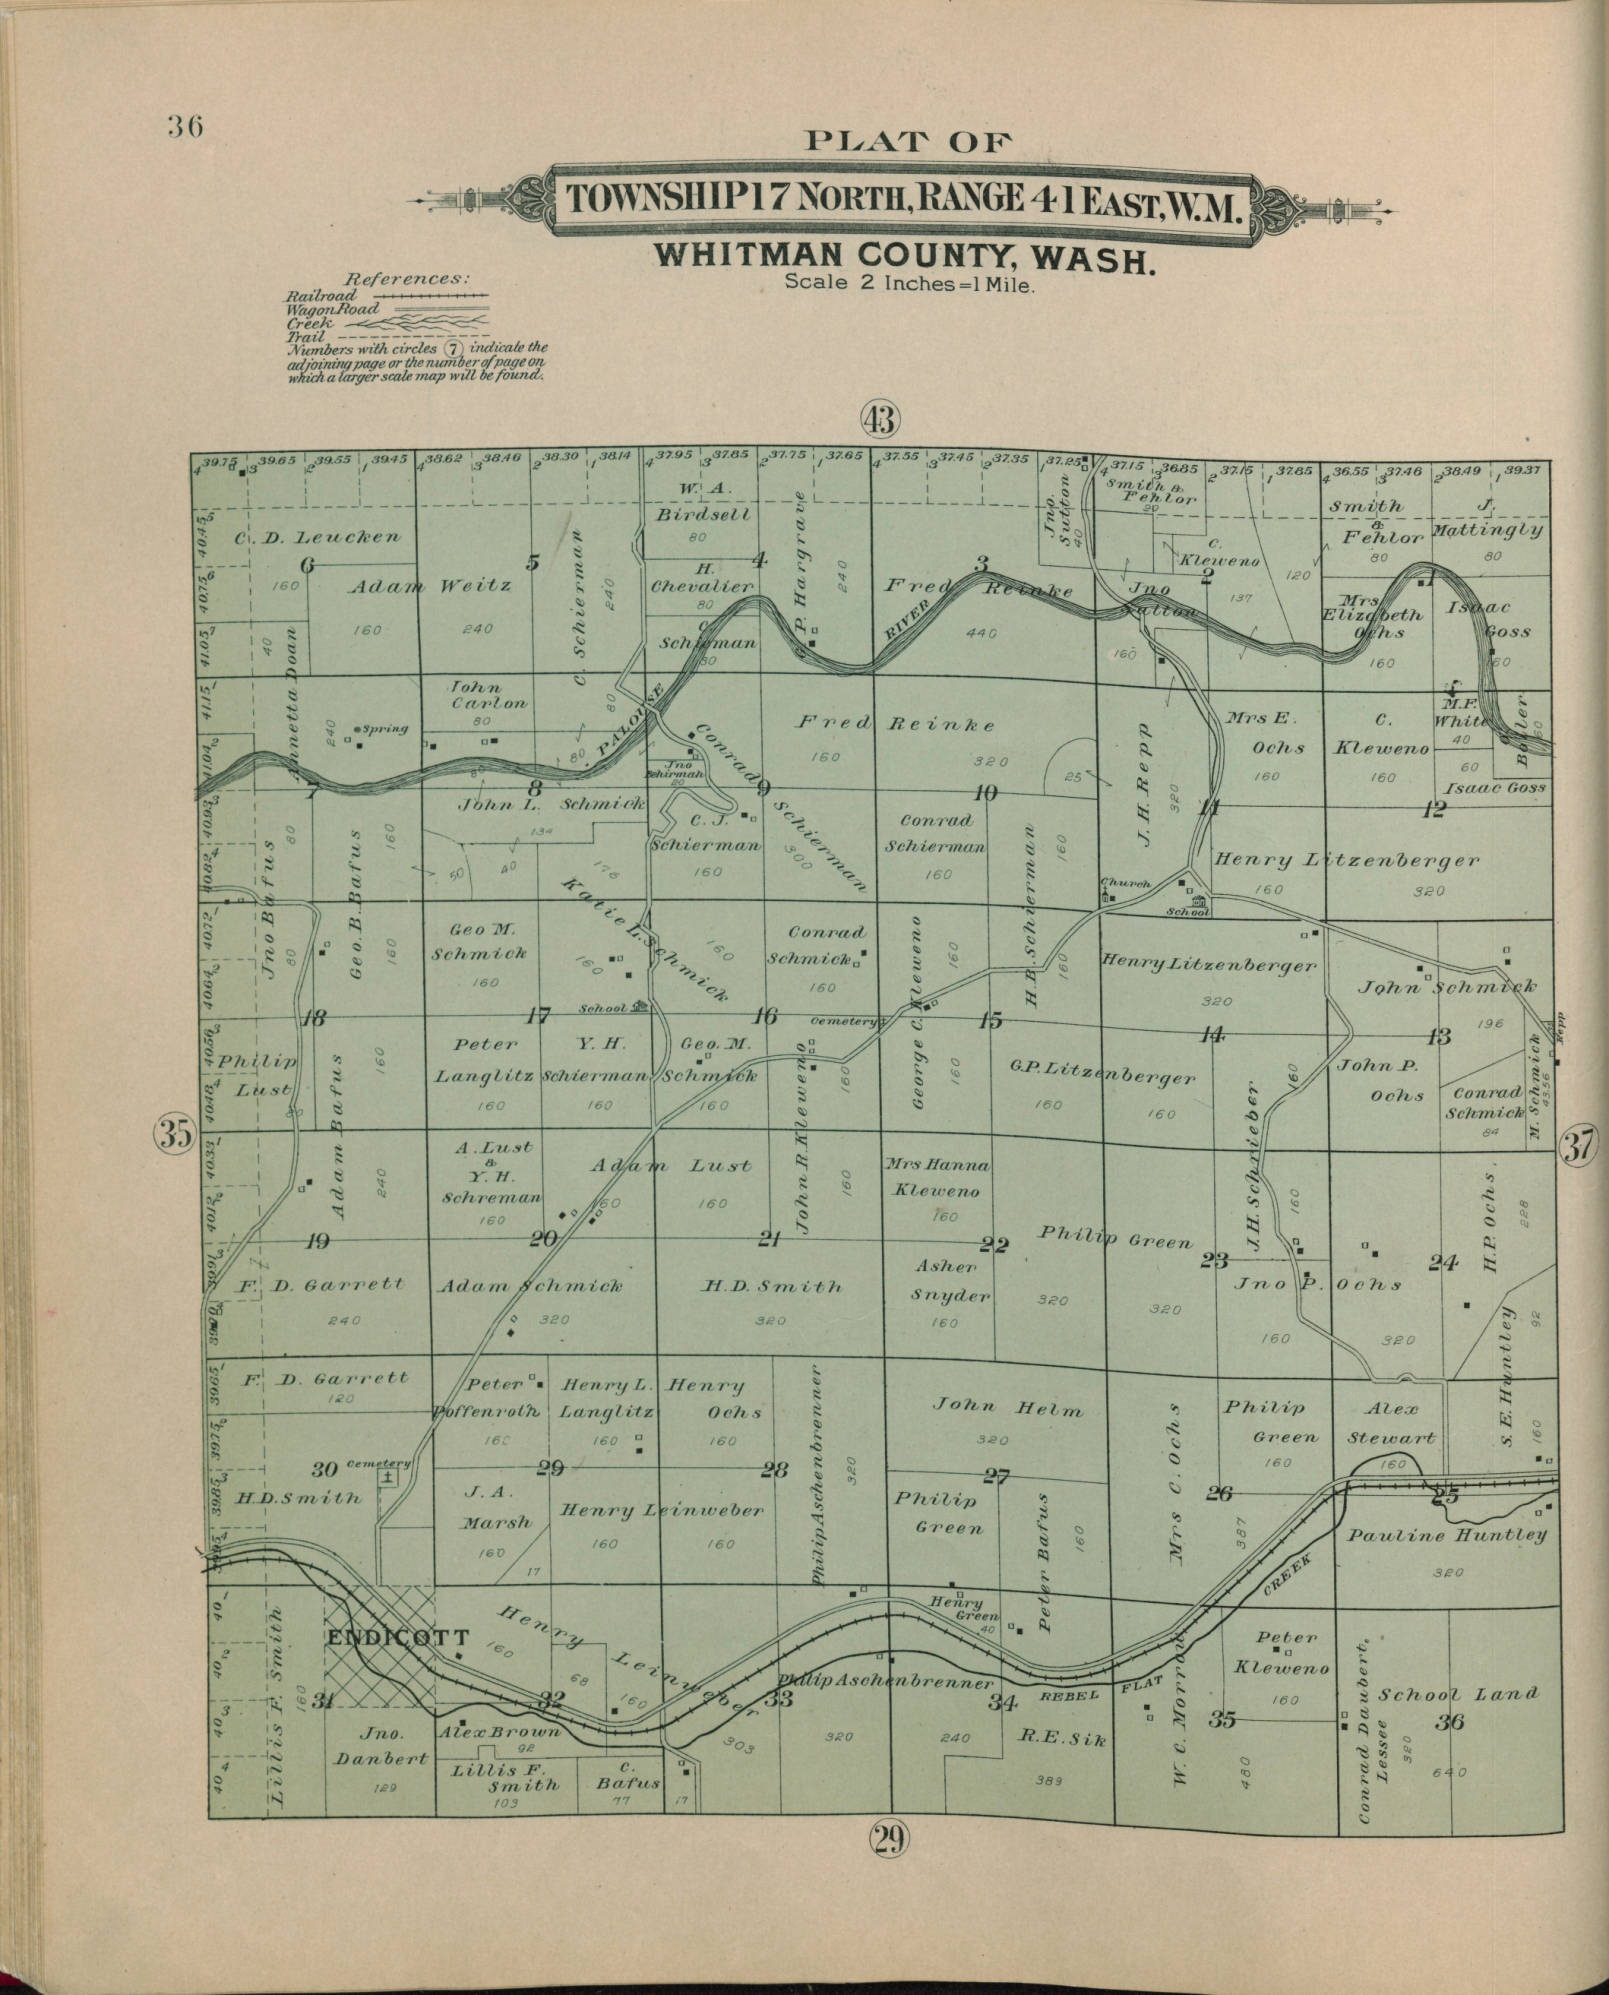 1910 Map of Whitman Co., Wash., Source: Washington State University Digital Archives.